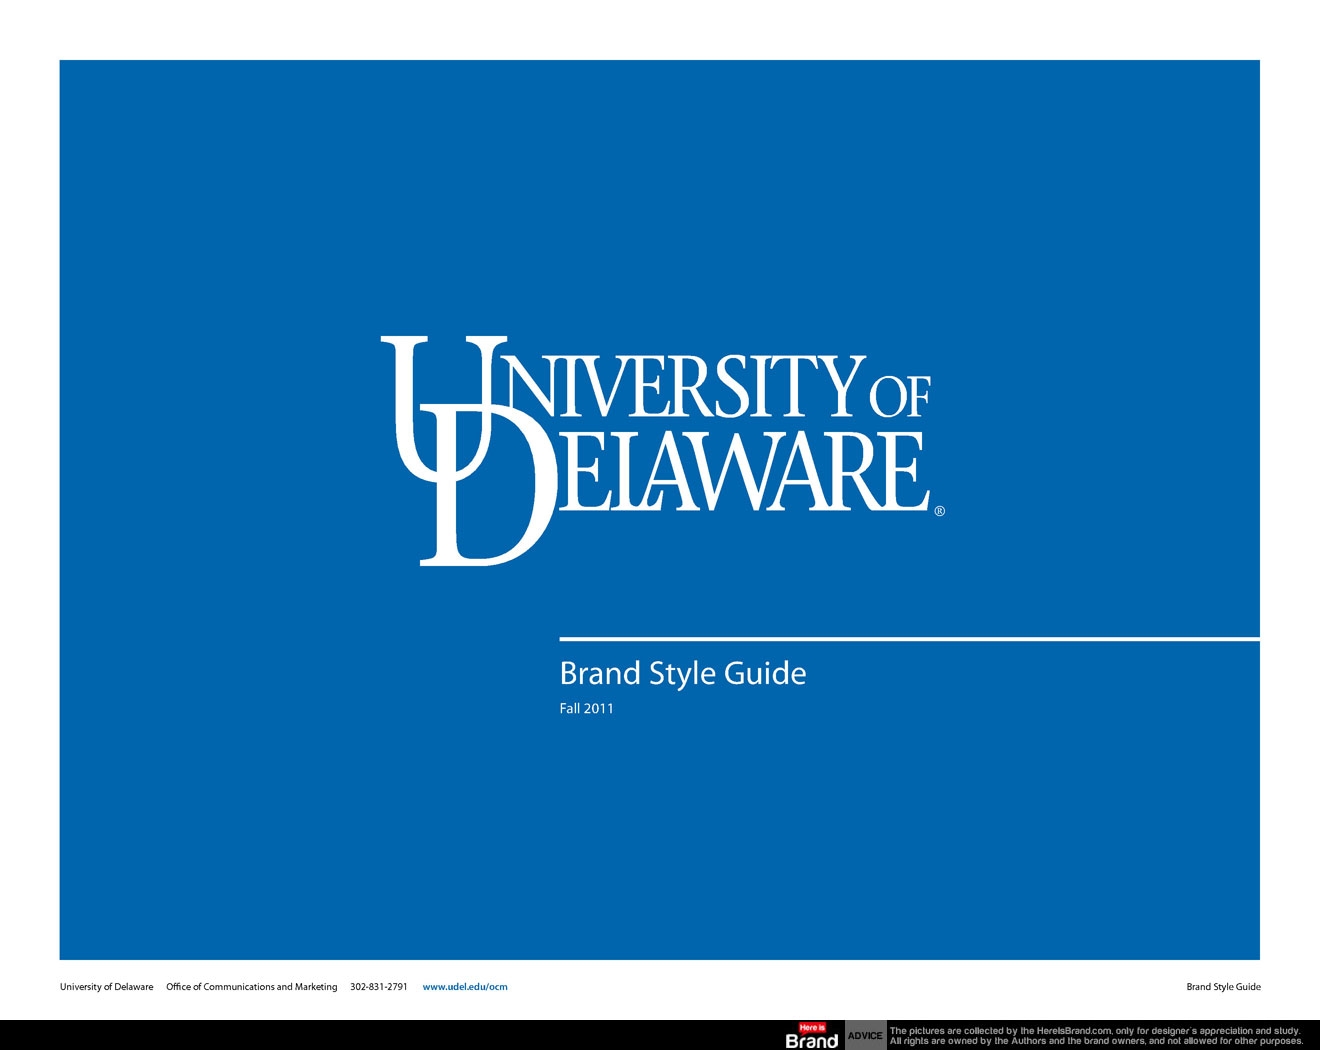 University of Delaware brand style guide